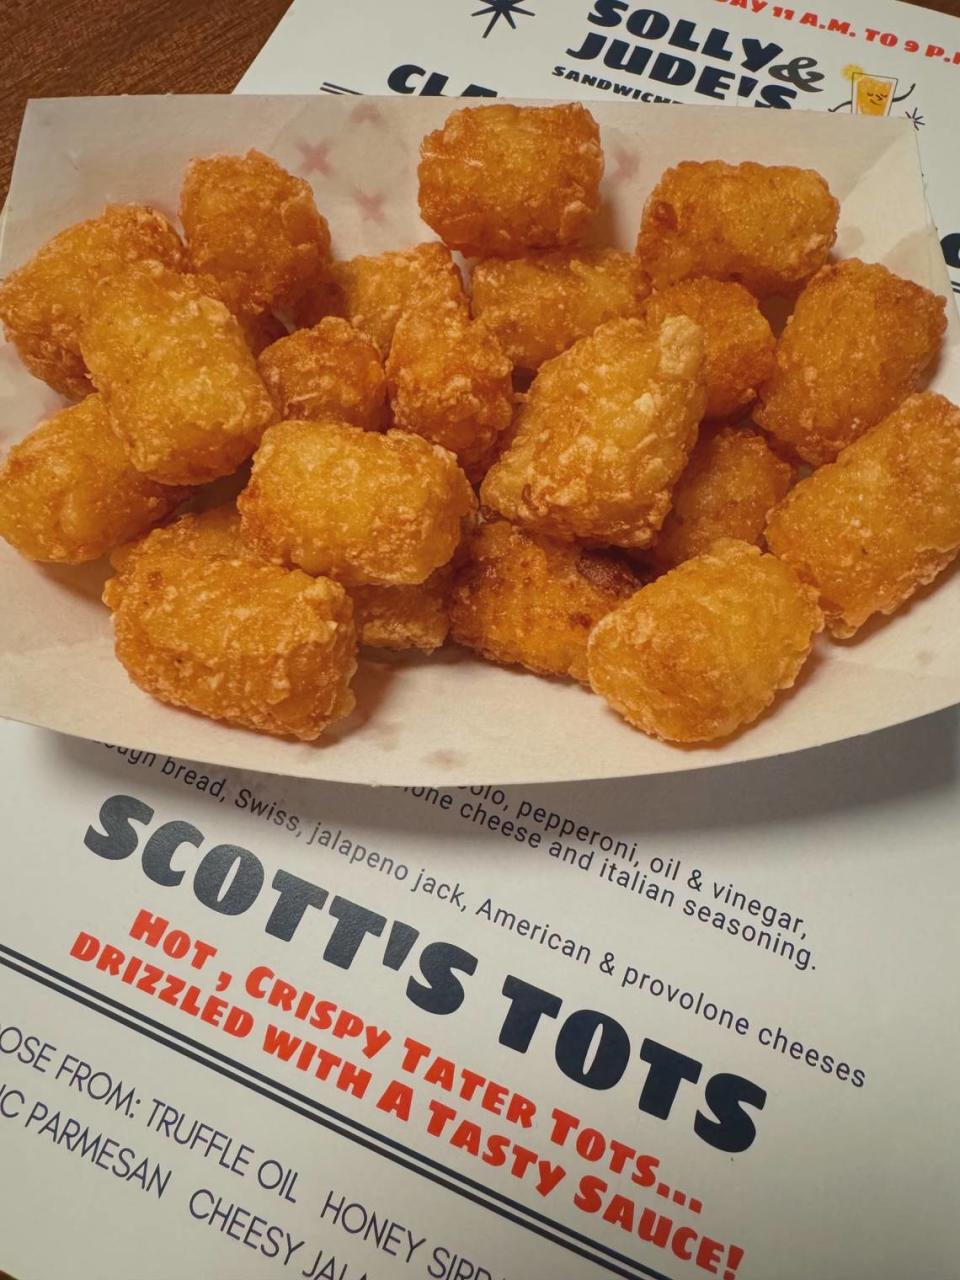 Solly & Jude’s in Wichita serves crispy tater tots dubbed “Scott’s Tots.”